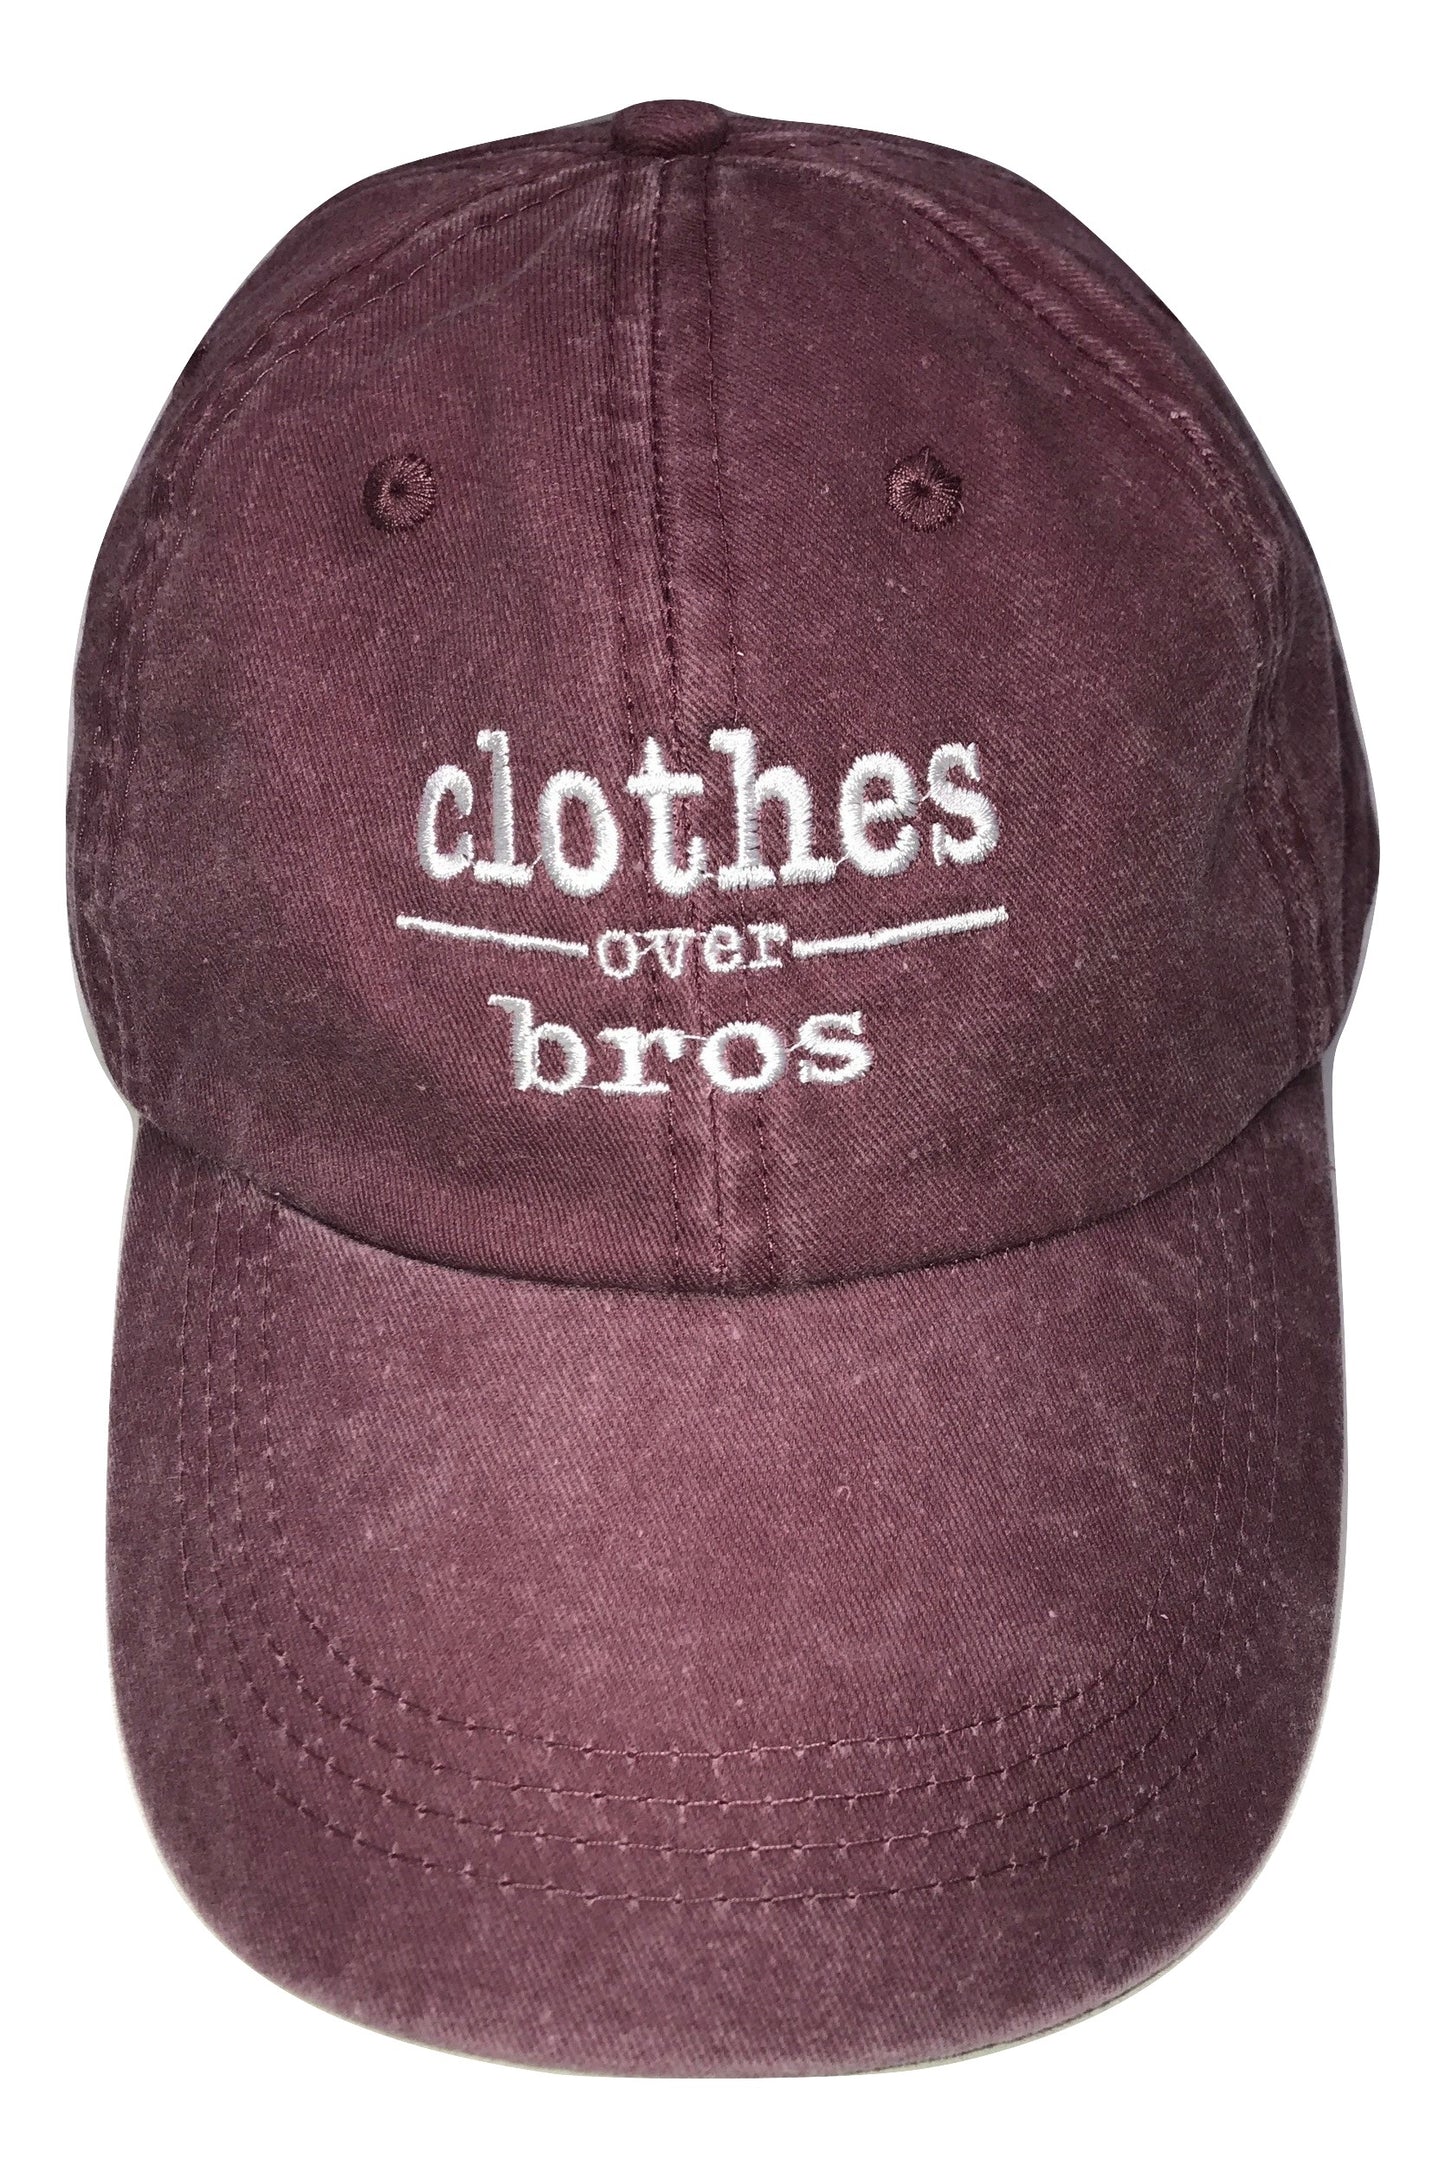 Clothes Over Bros - Hat - Brick ( White thread )